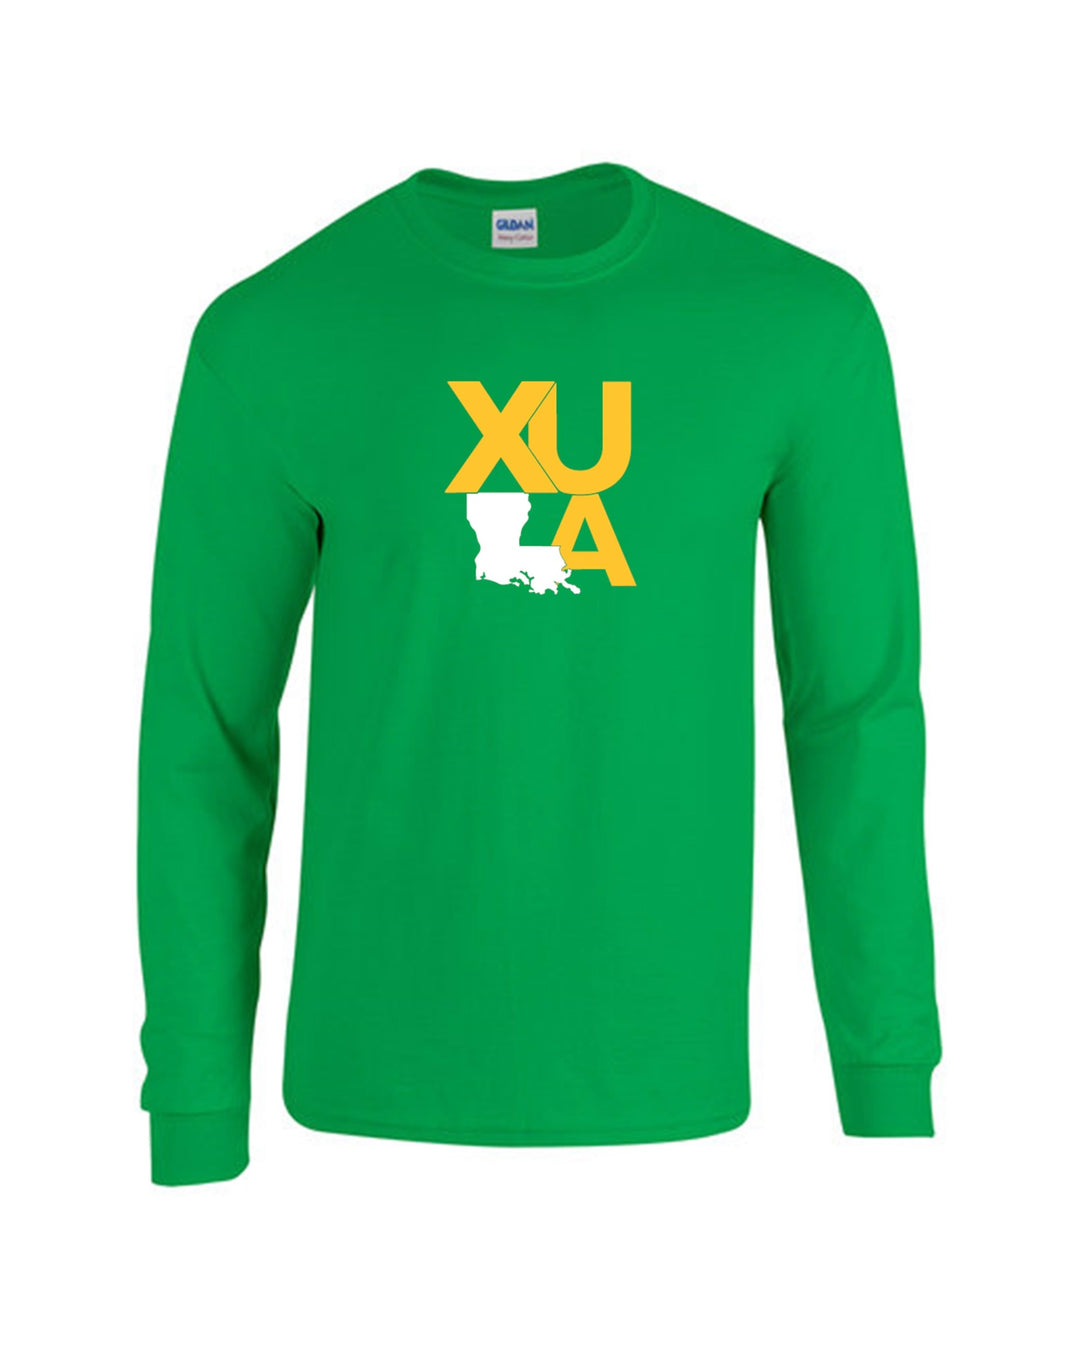 XULA Long-Sleeve Performance Shirt Xavier University Kelly Green Mens Small - Third Coast Soccer